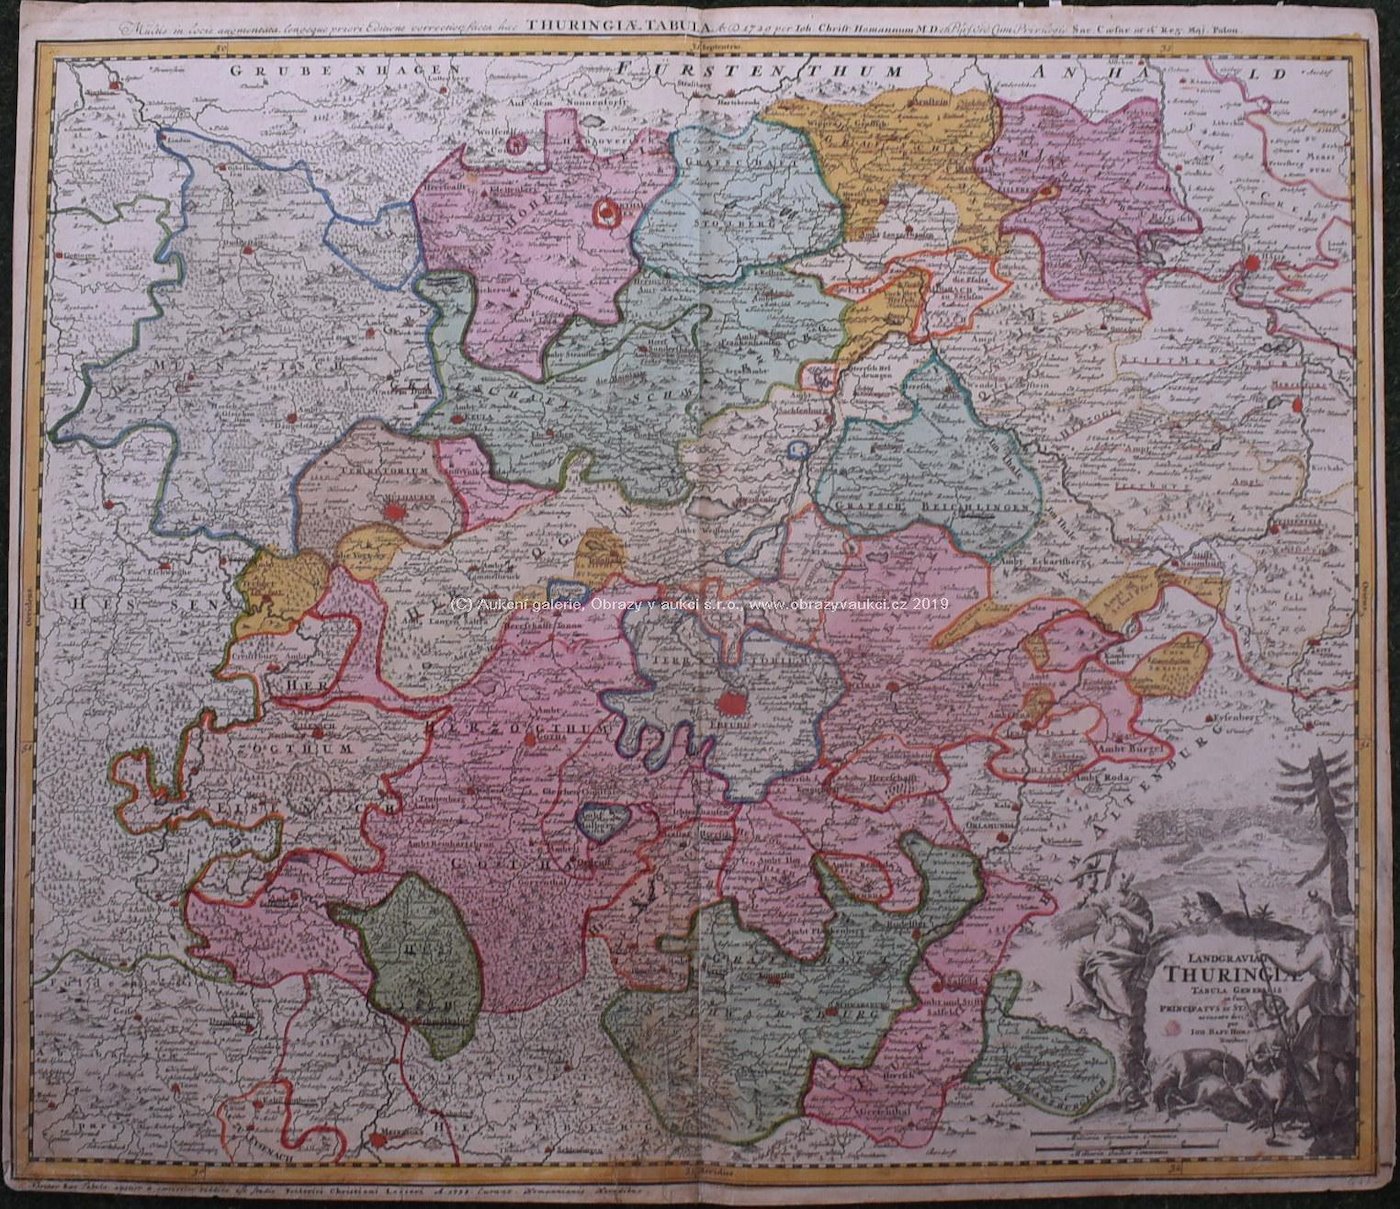 Johan B. Homann - Mapa Durynska 1738